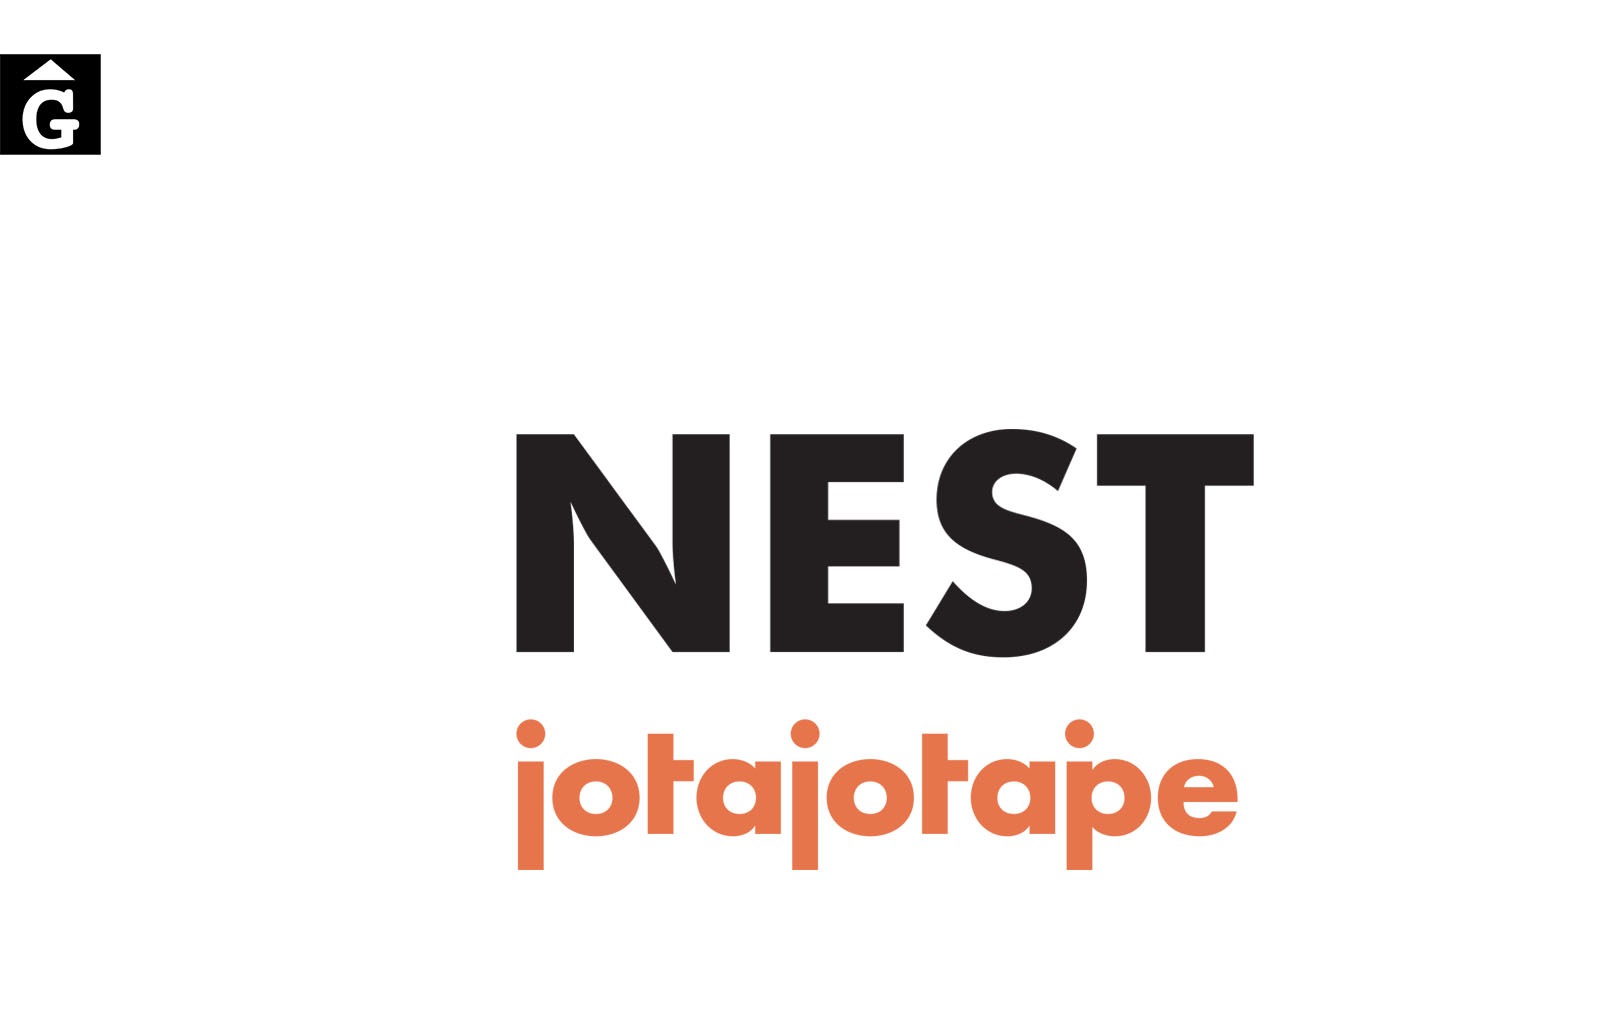 Nest Jotajotape logo Infinity 2 Jotajotape jjp by mobles Gifreu